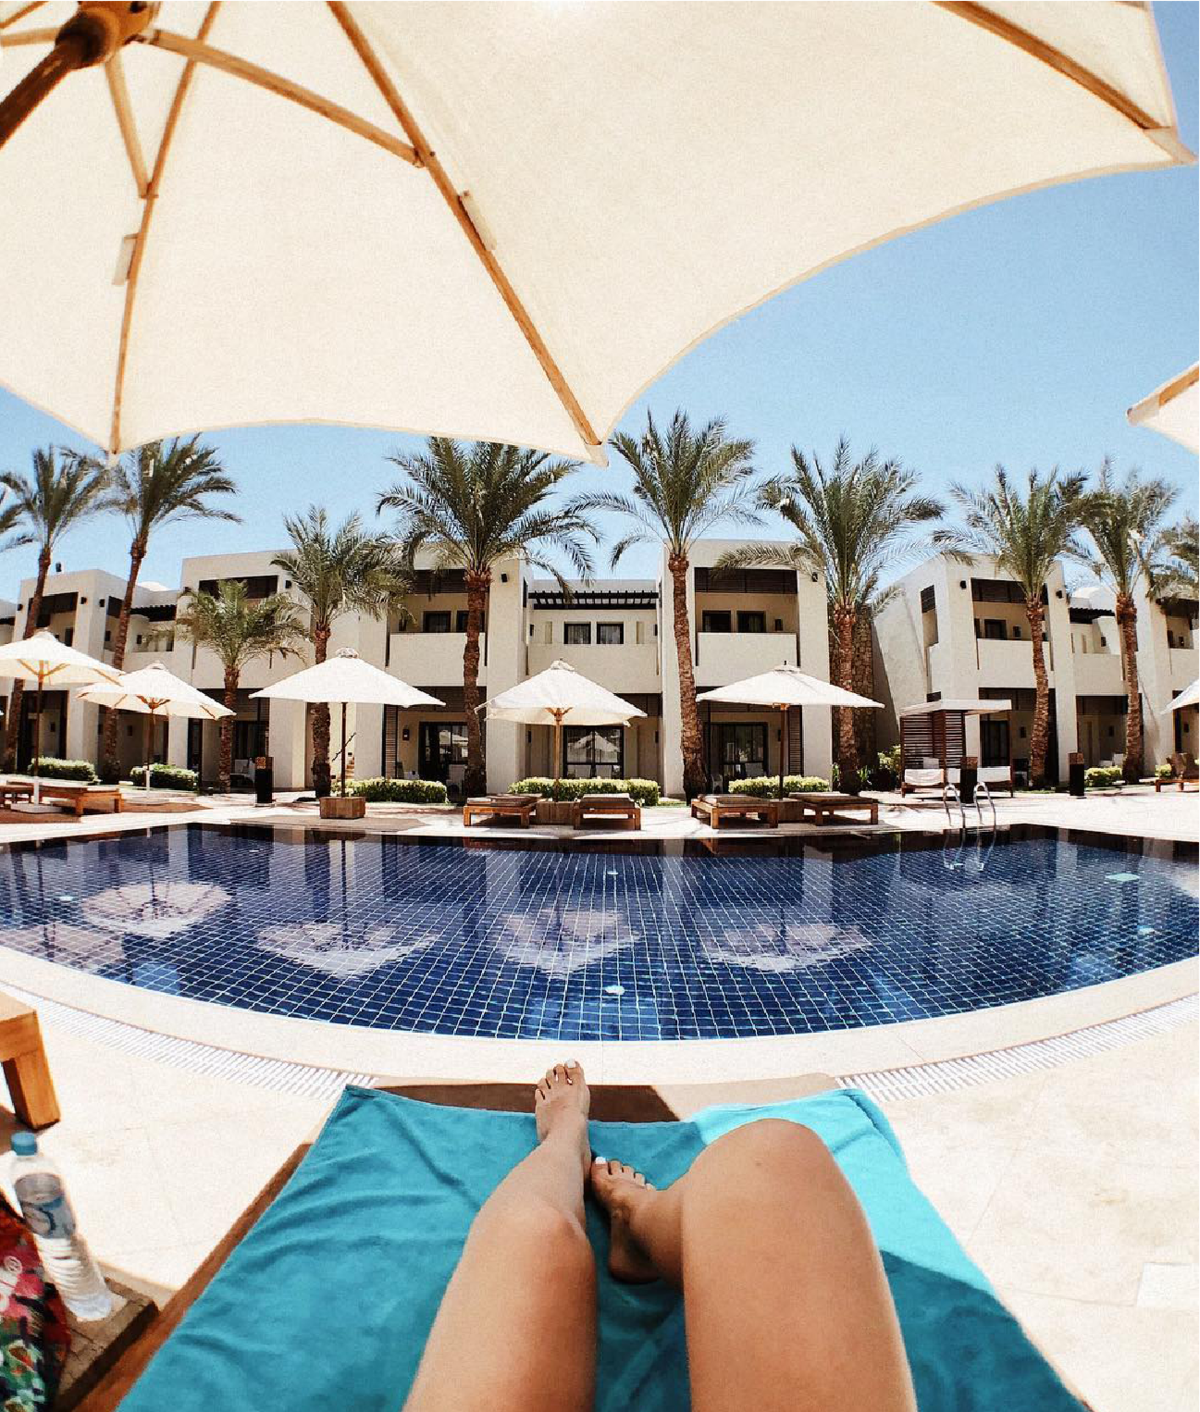 Captured on SANDMARC's Fisheye lens, a girl tanning at a resort